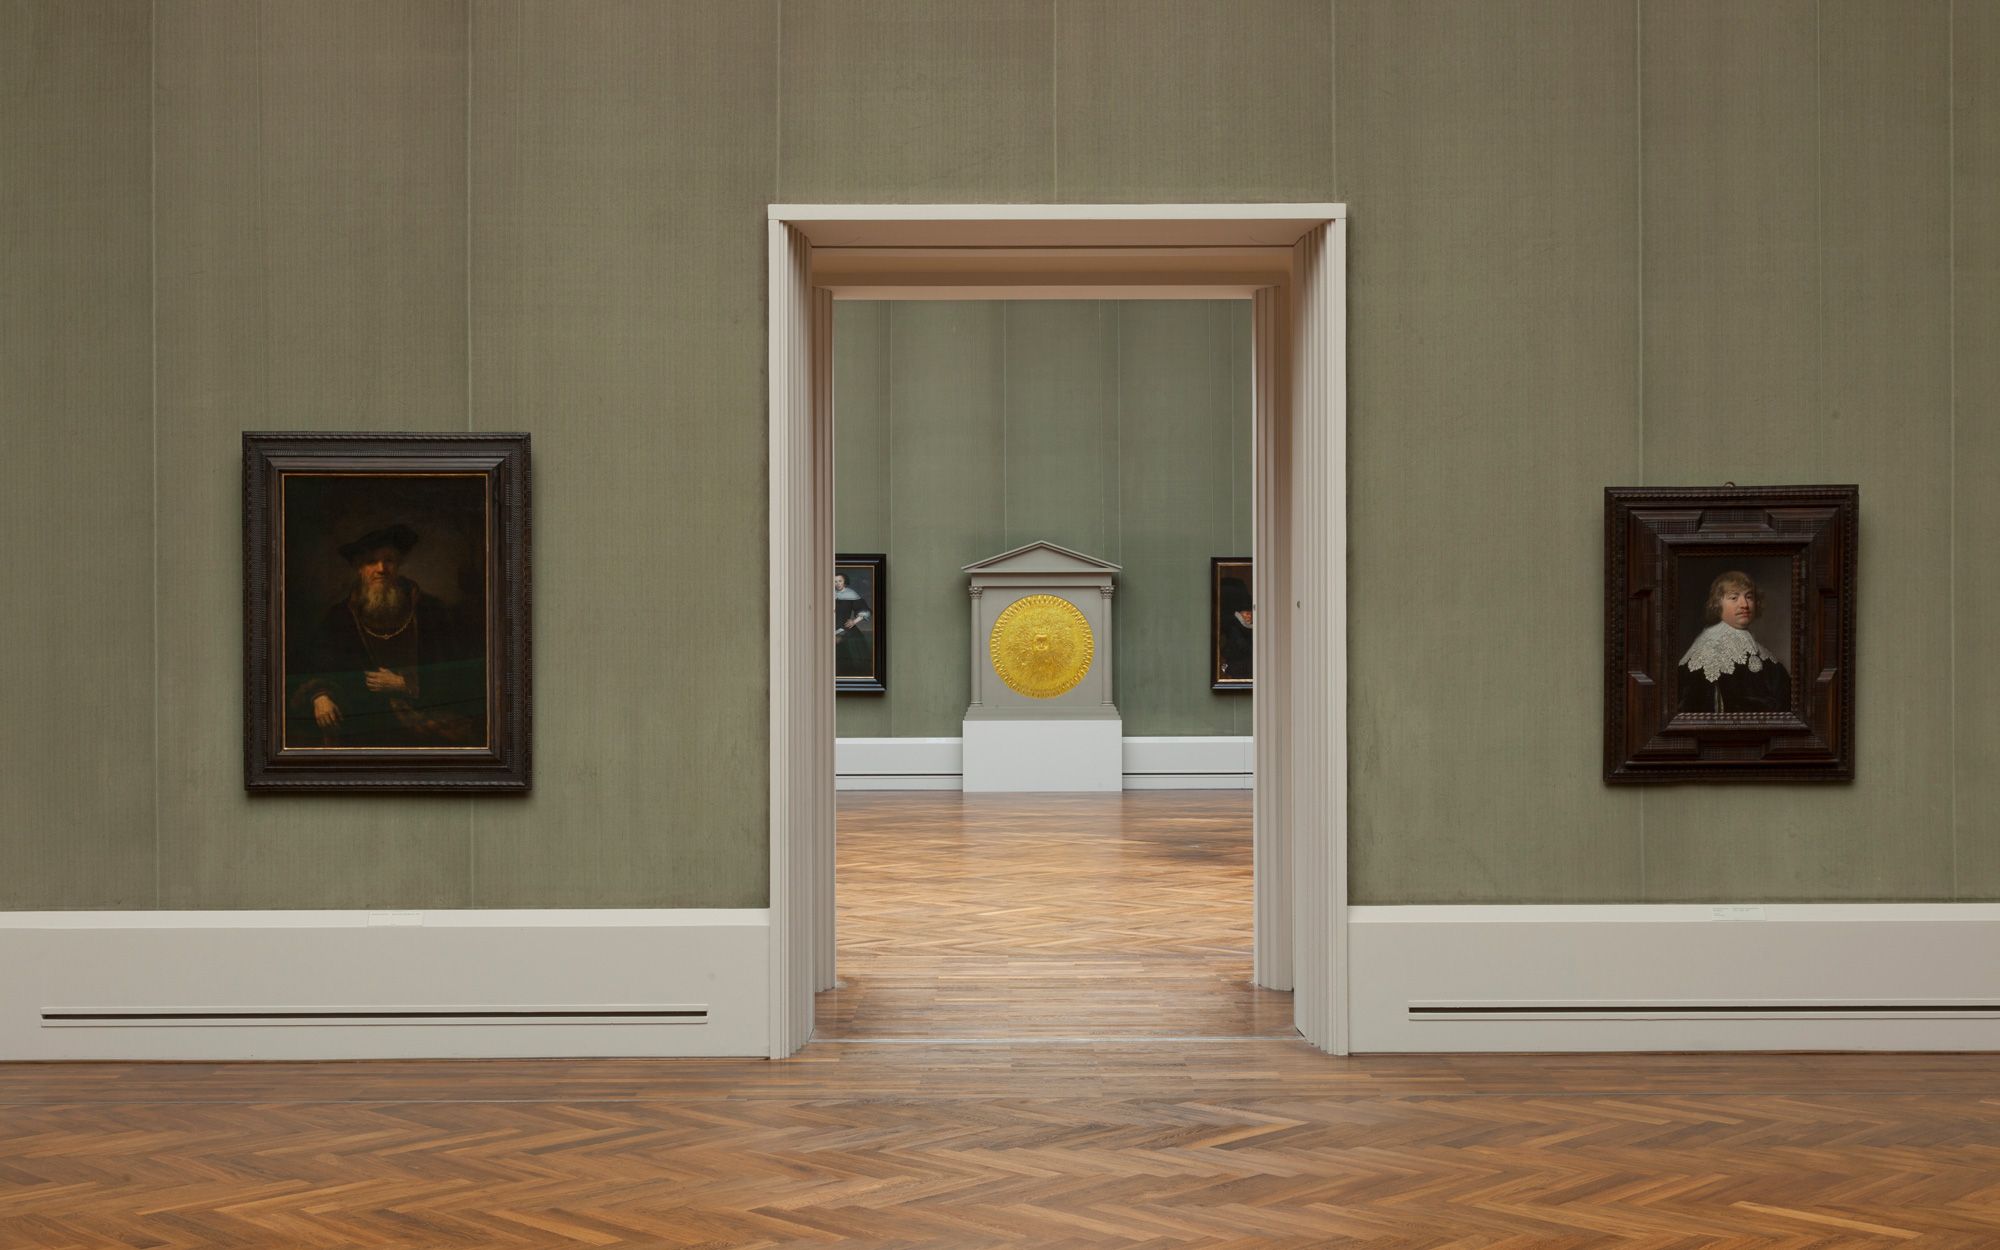 Exhibition view of Mark Alexander's Golden Wonder painting. Set in between two Dutch old masters in Gemelde Gallery, Berlin.